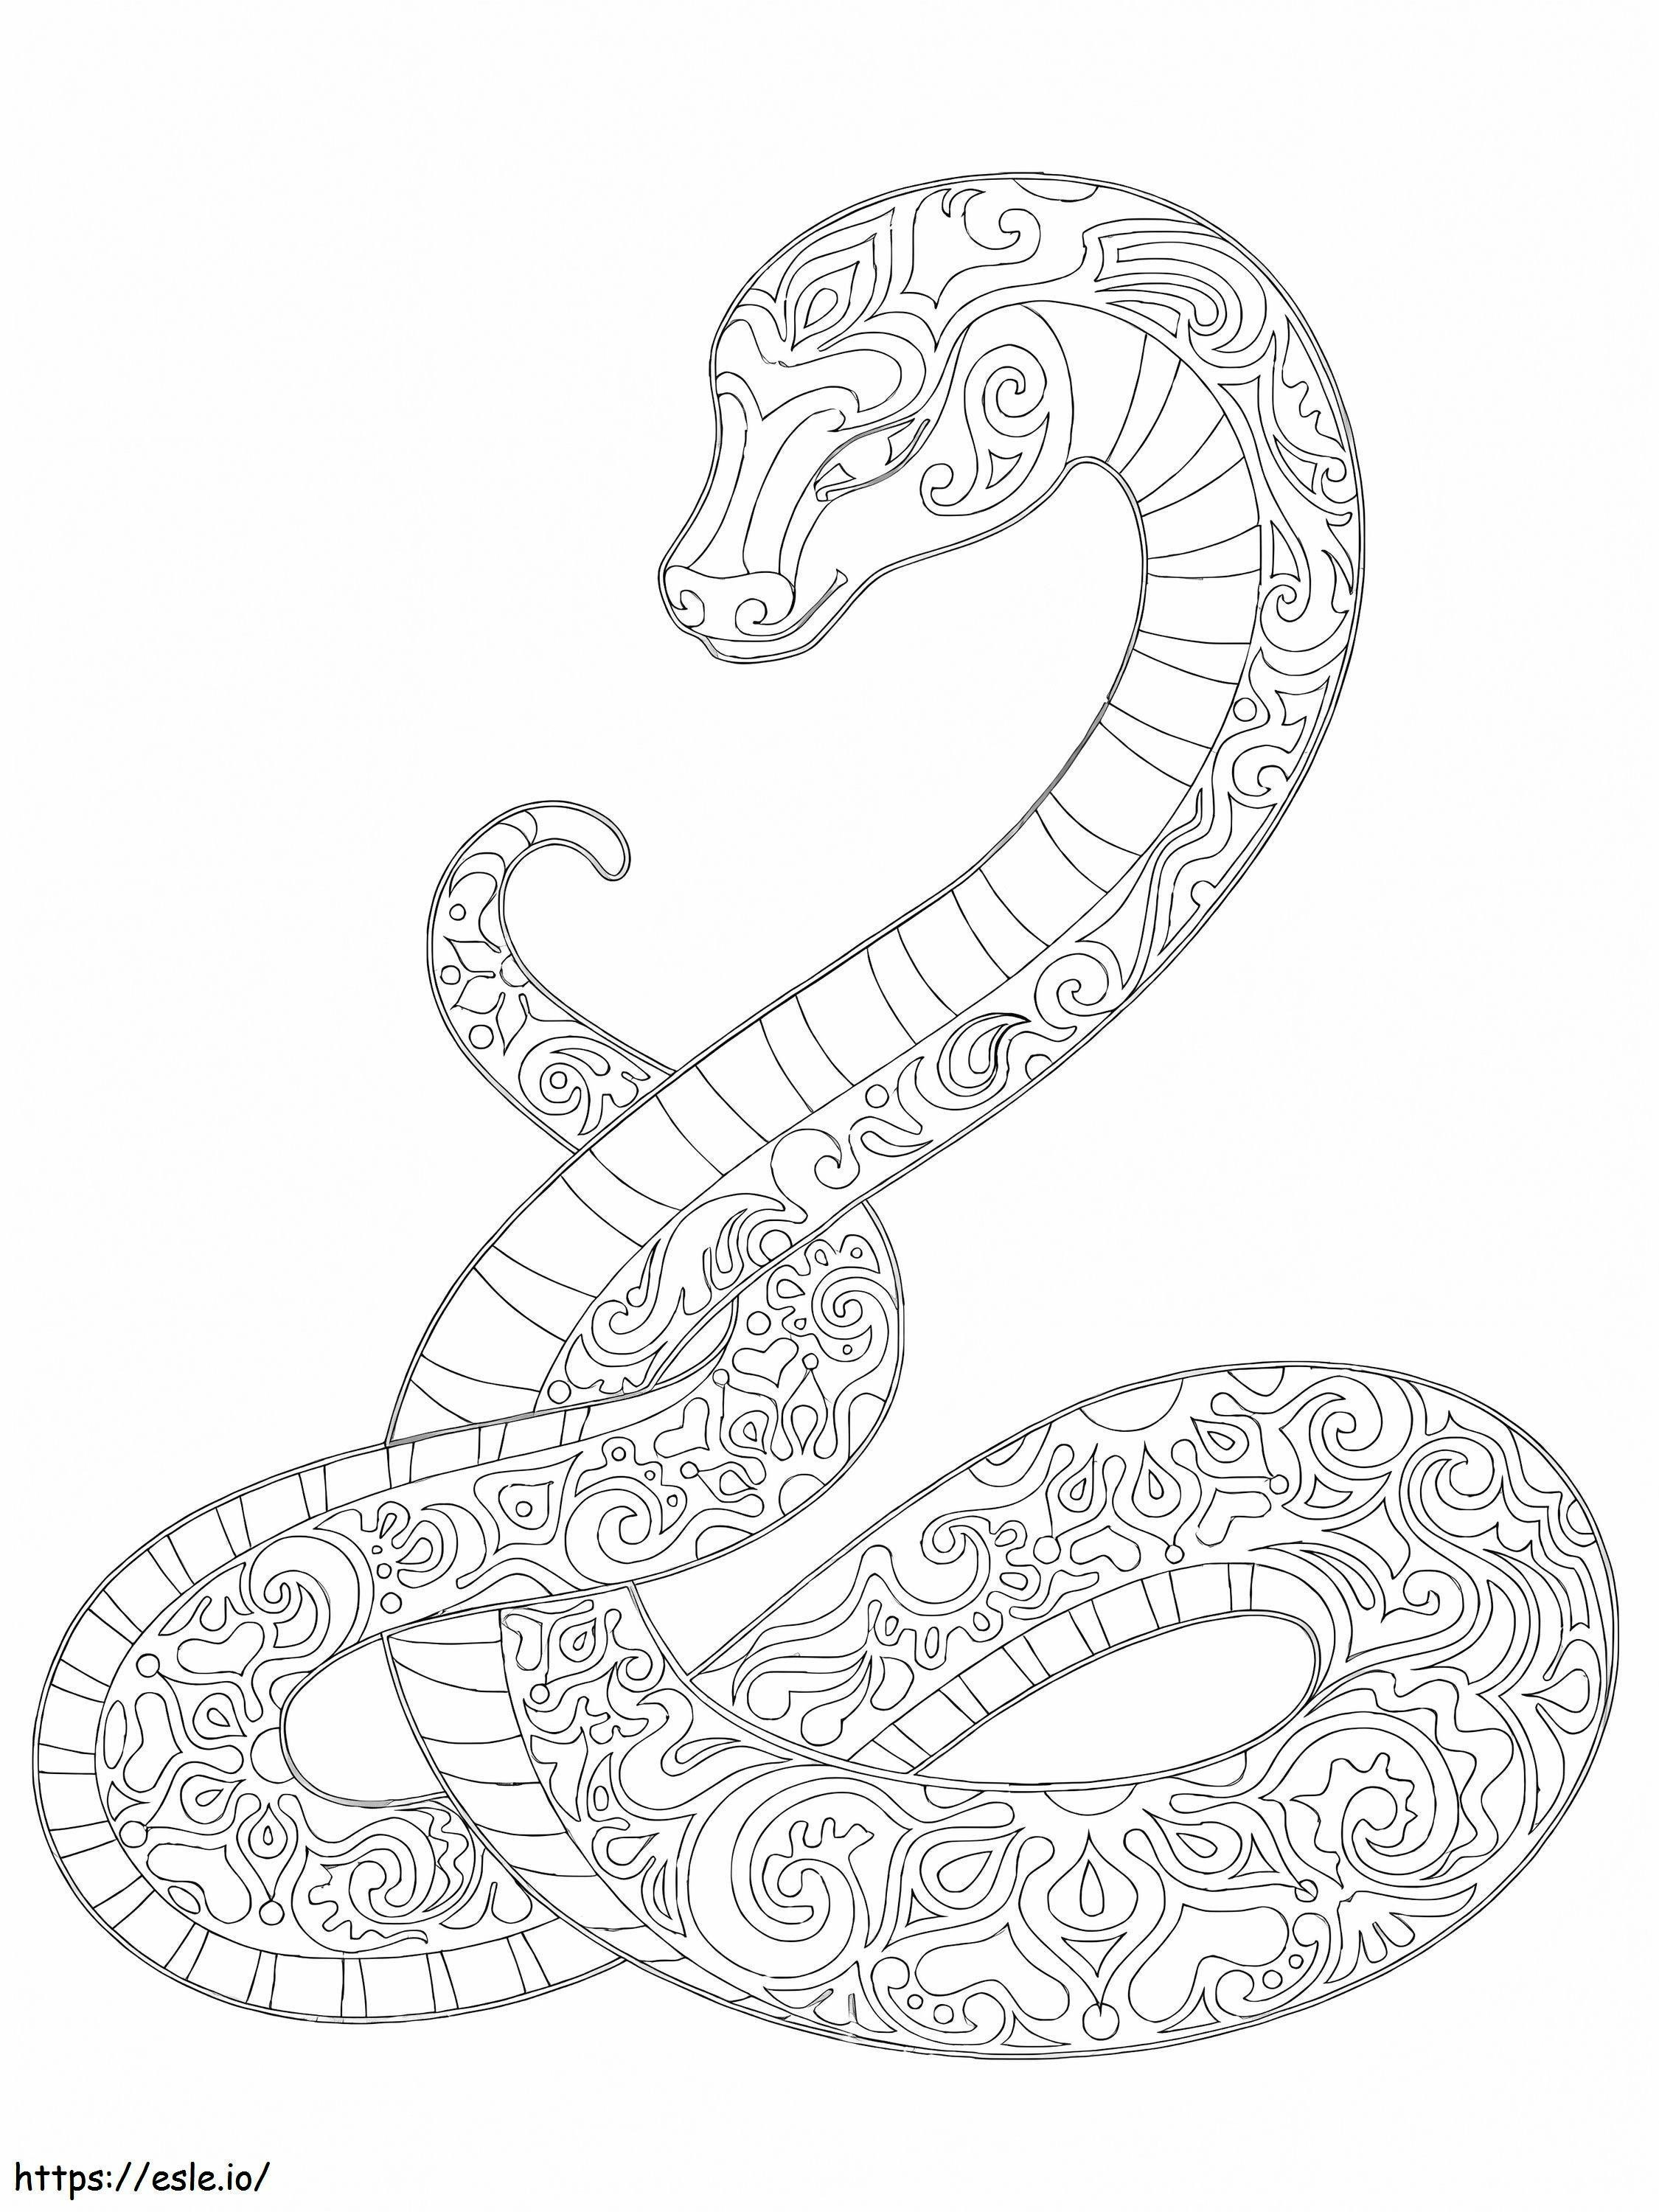 Serpente mandala da colorare